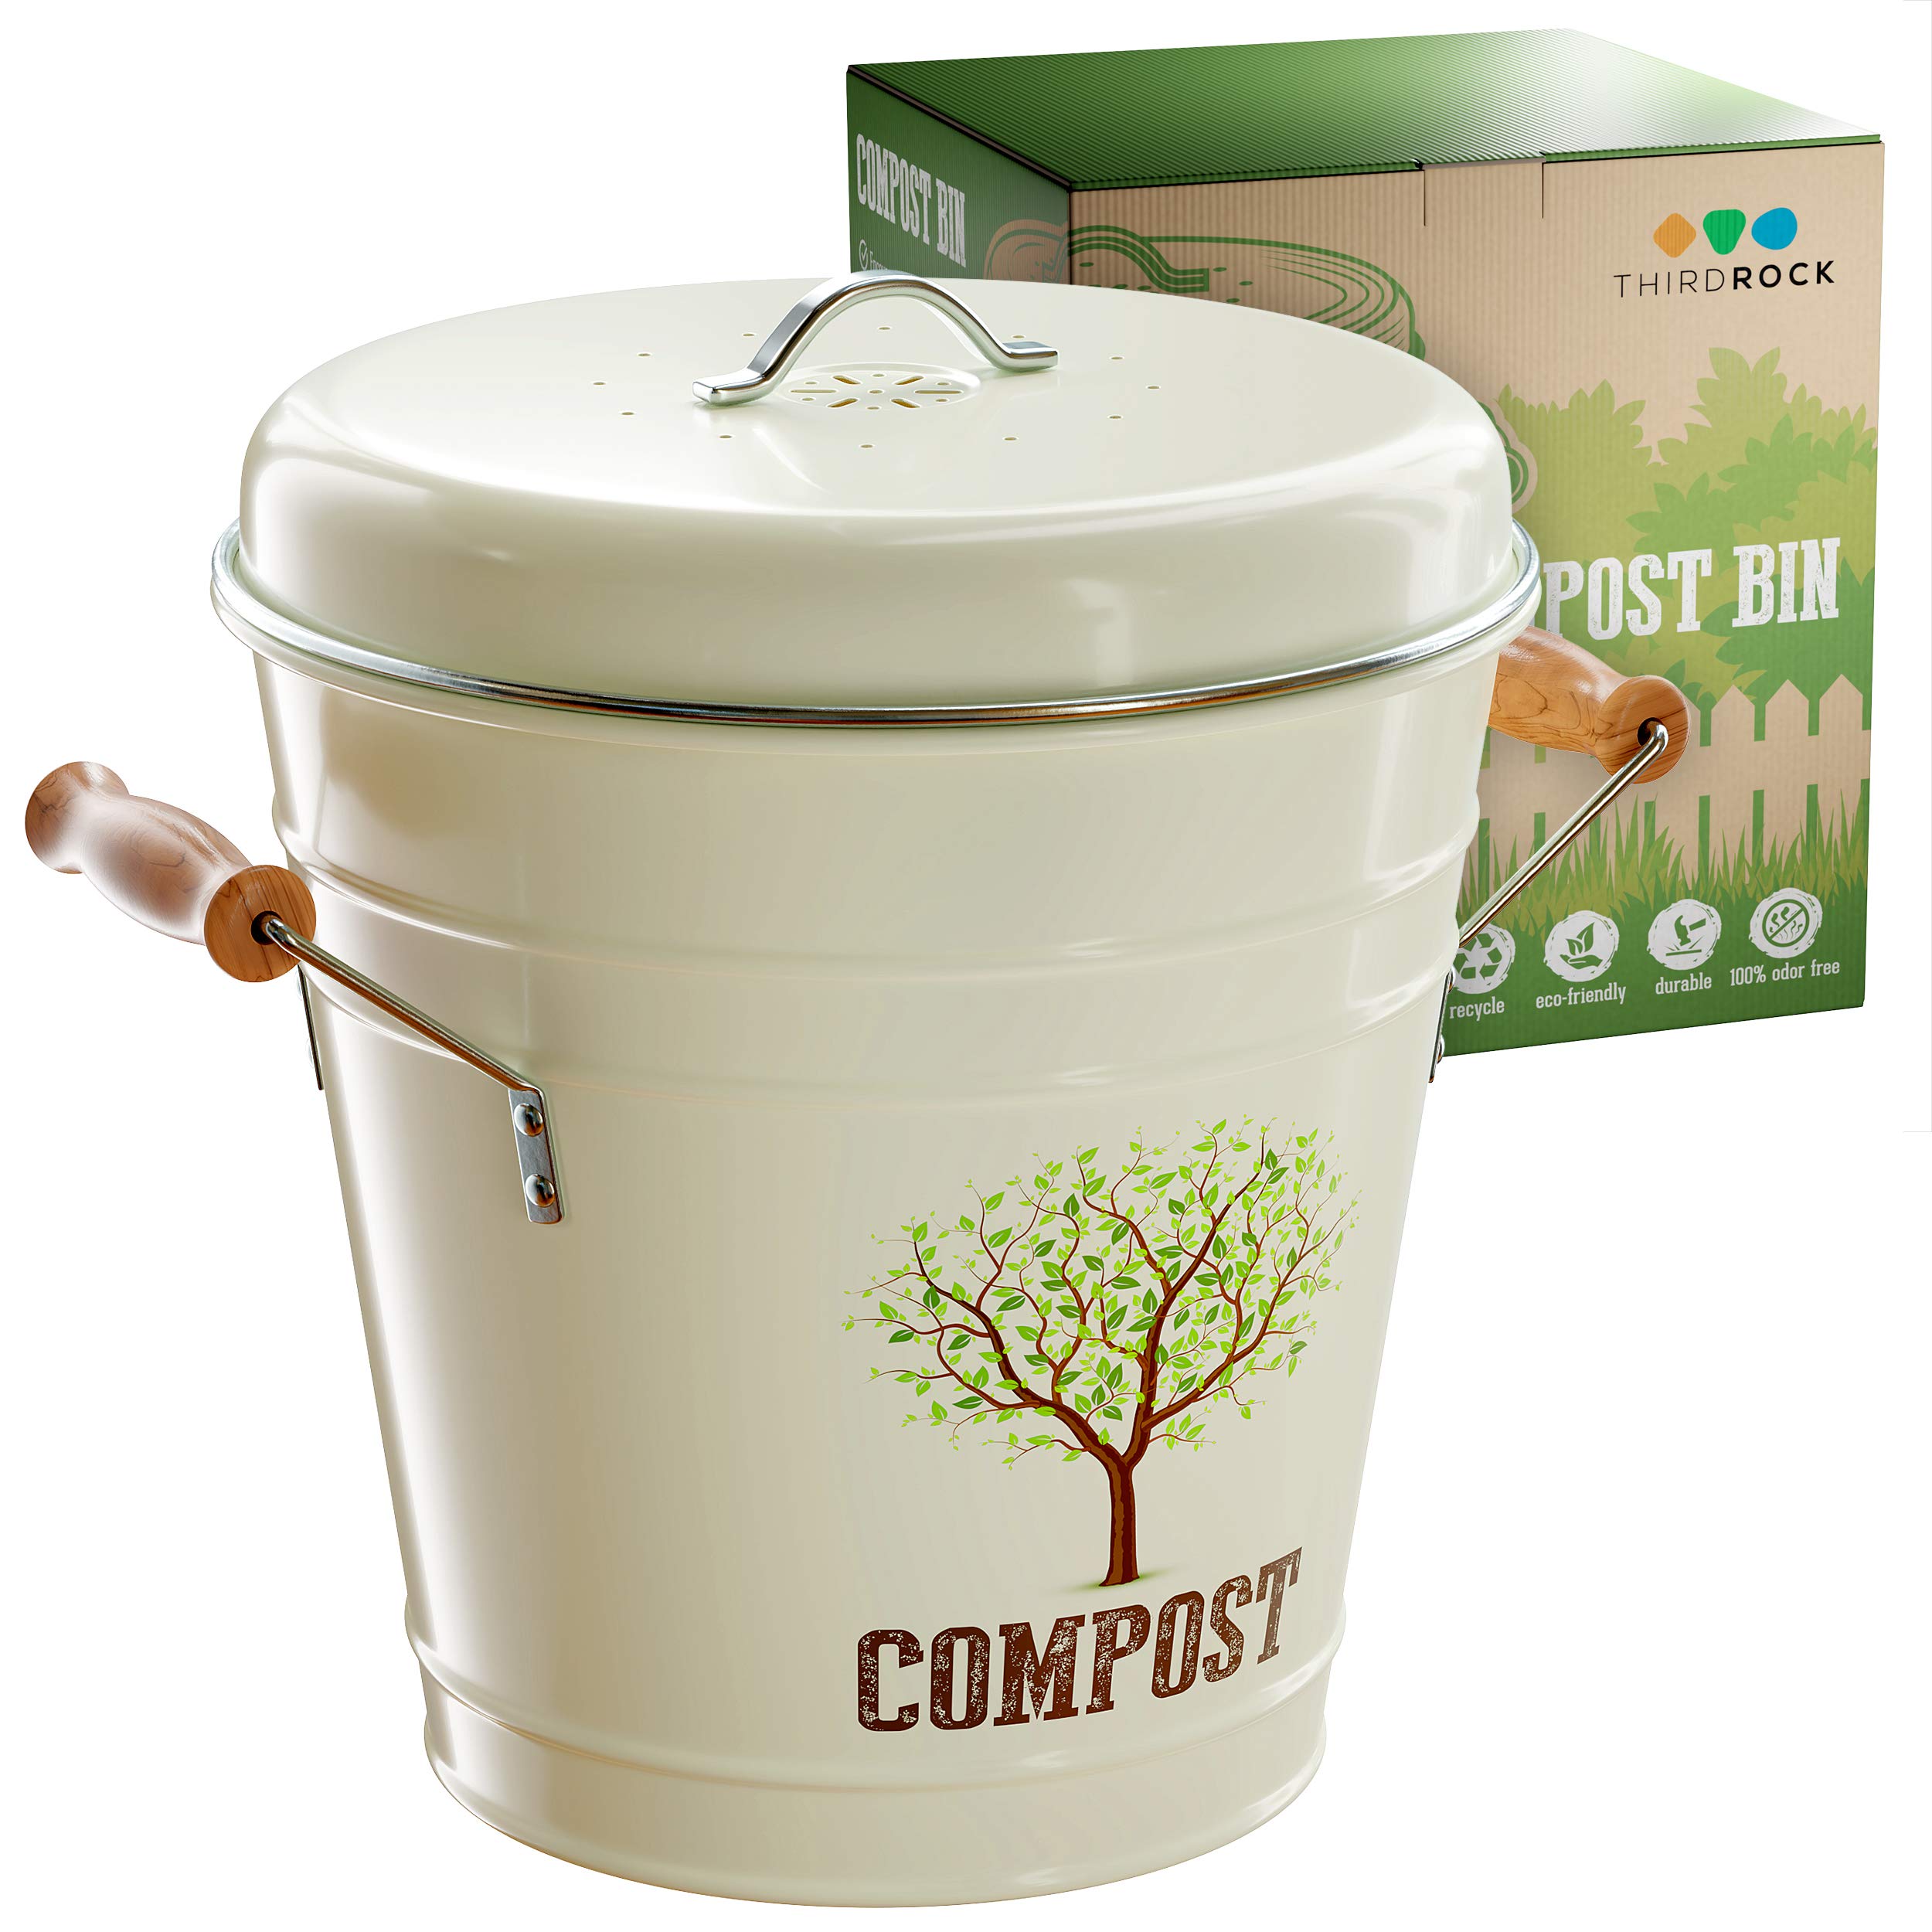 Third Rock Compost Bin for Kitchen Counter